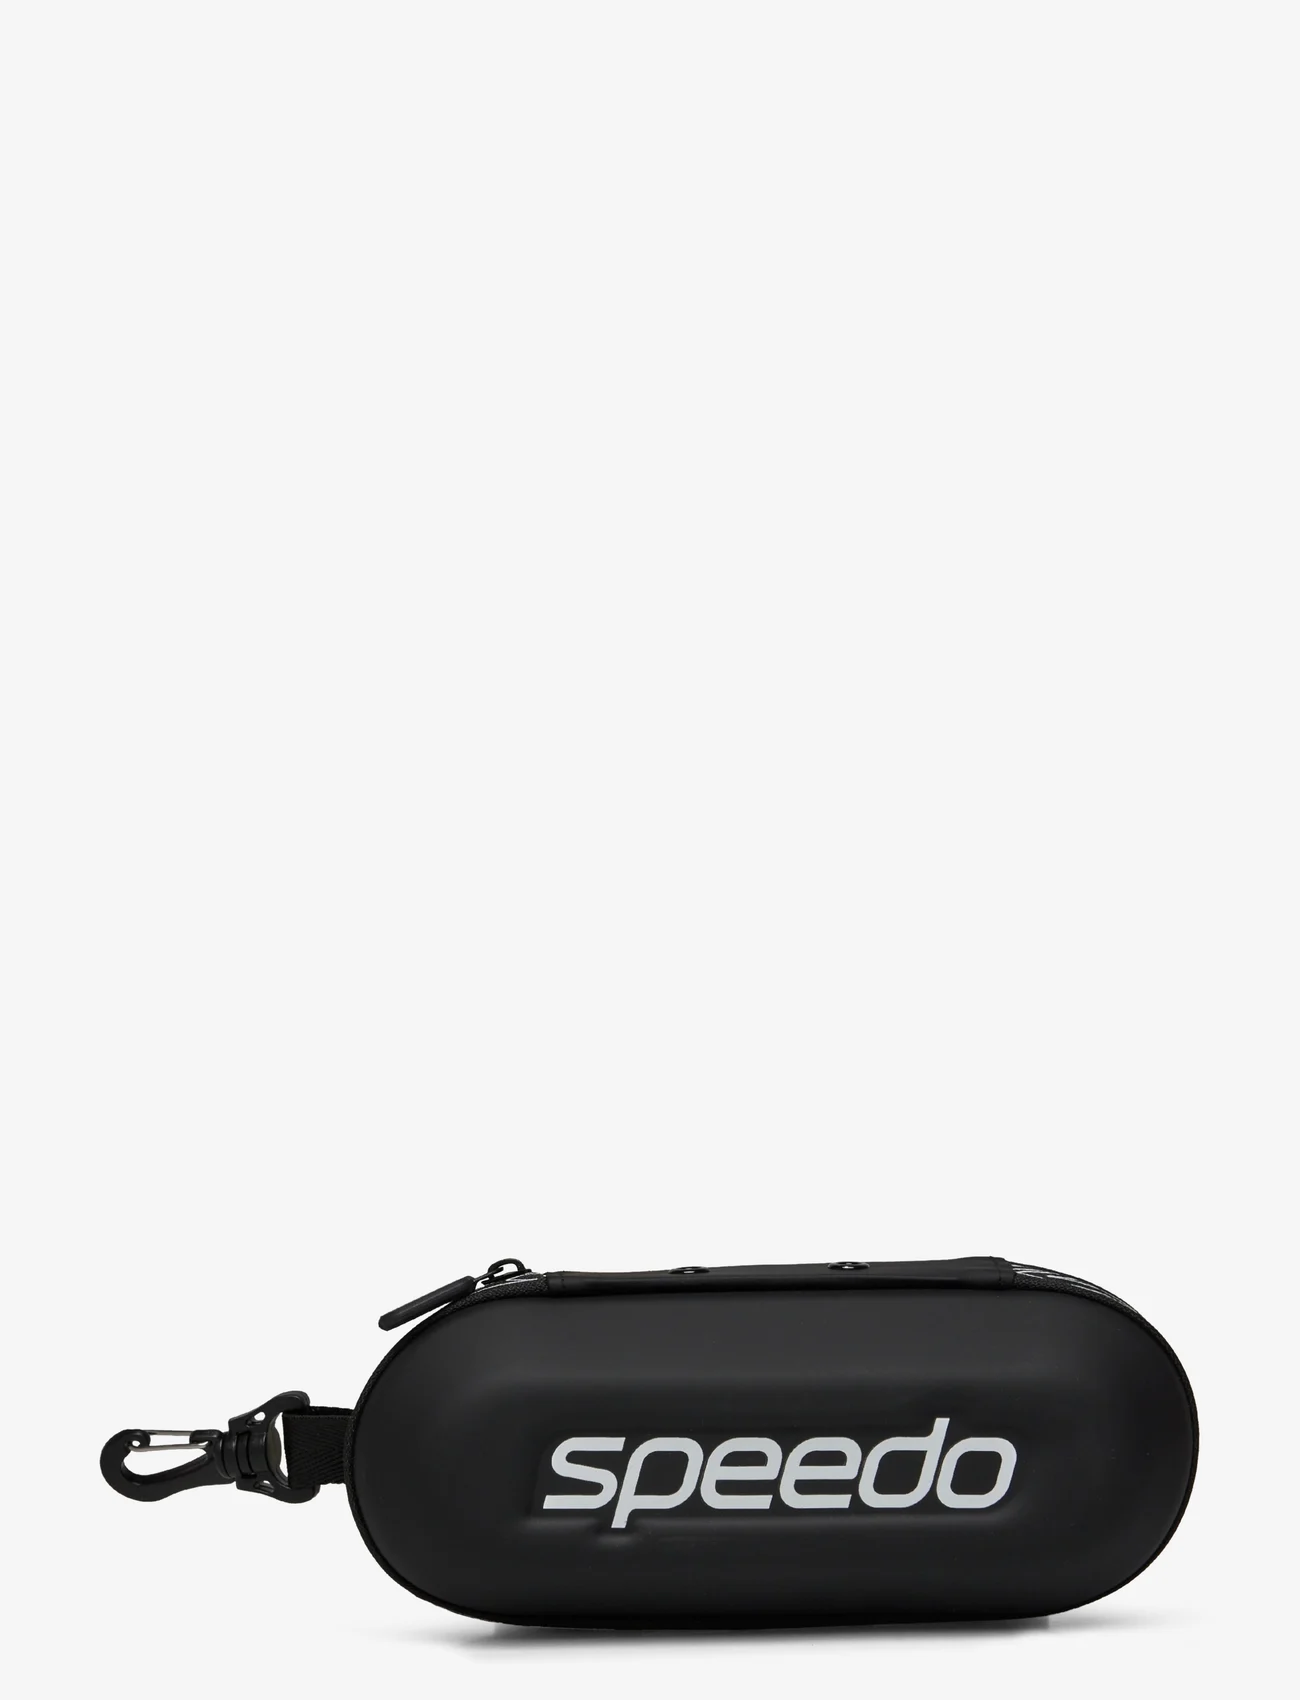 Speedo - Goggles Storage - black - 0